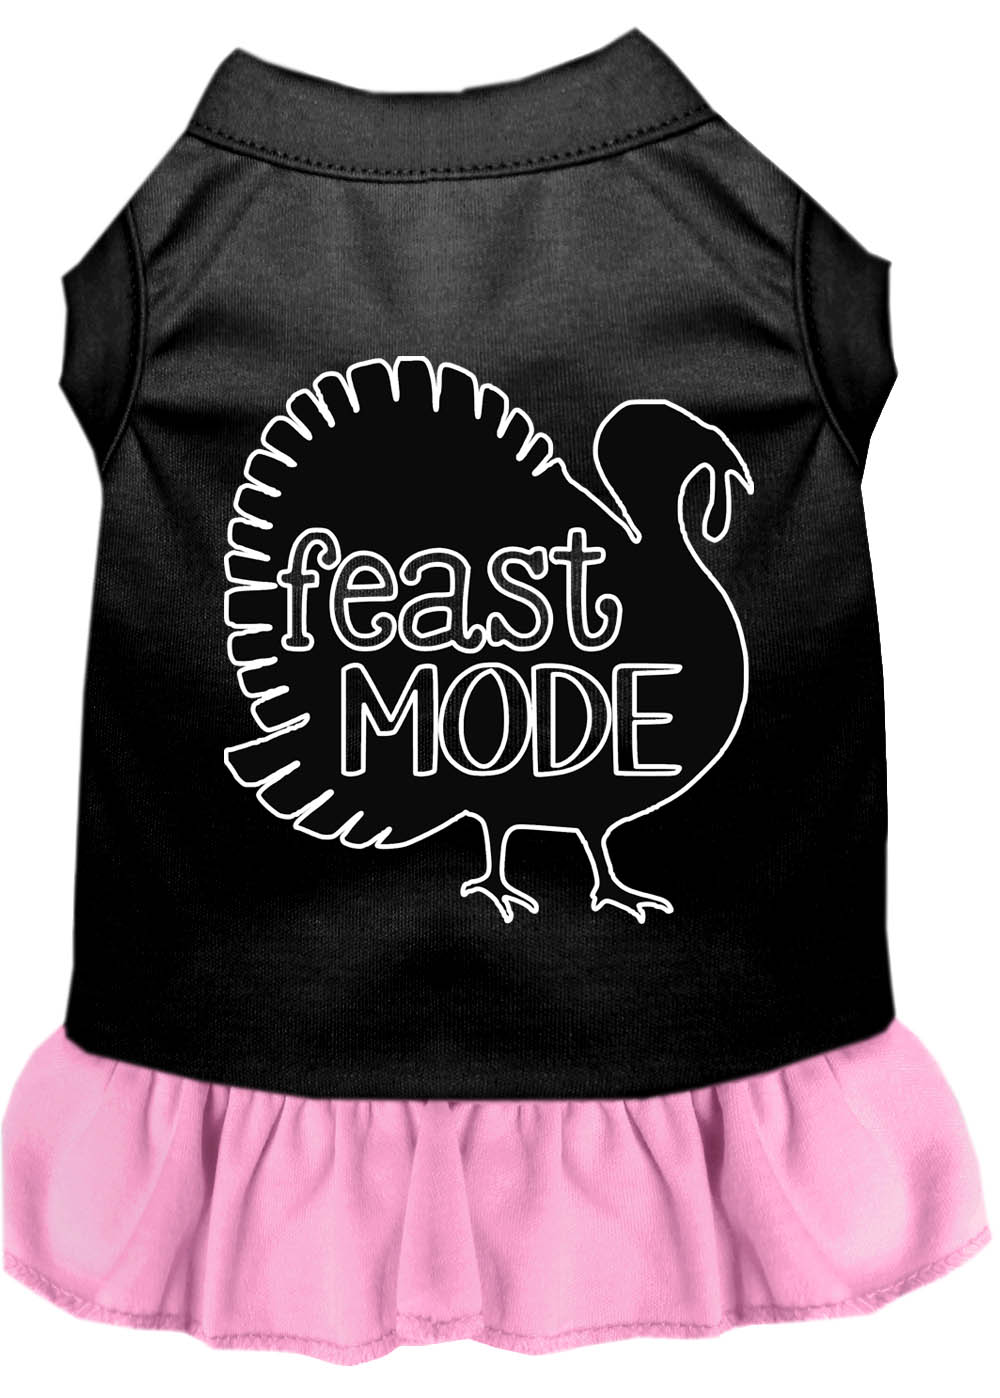 Feast Mode Screen Print Dog Dress Black with Light Pink Lg